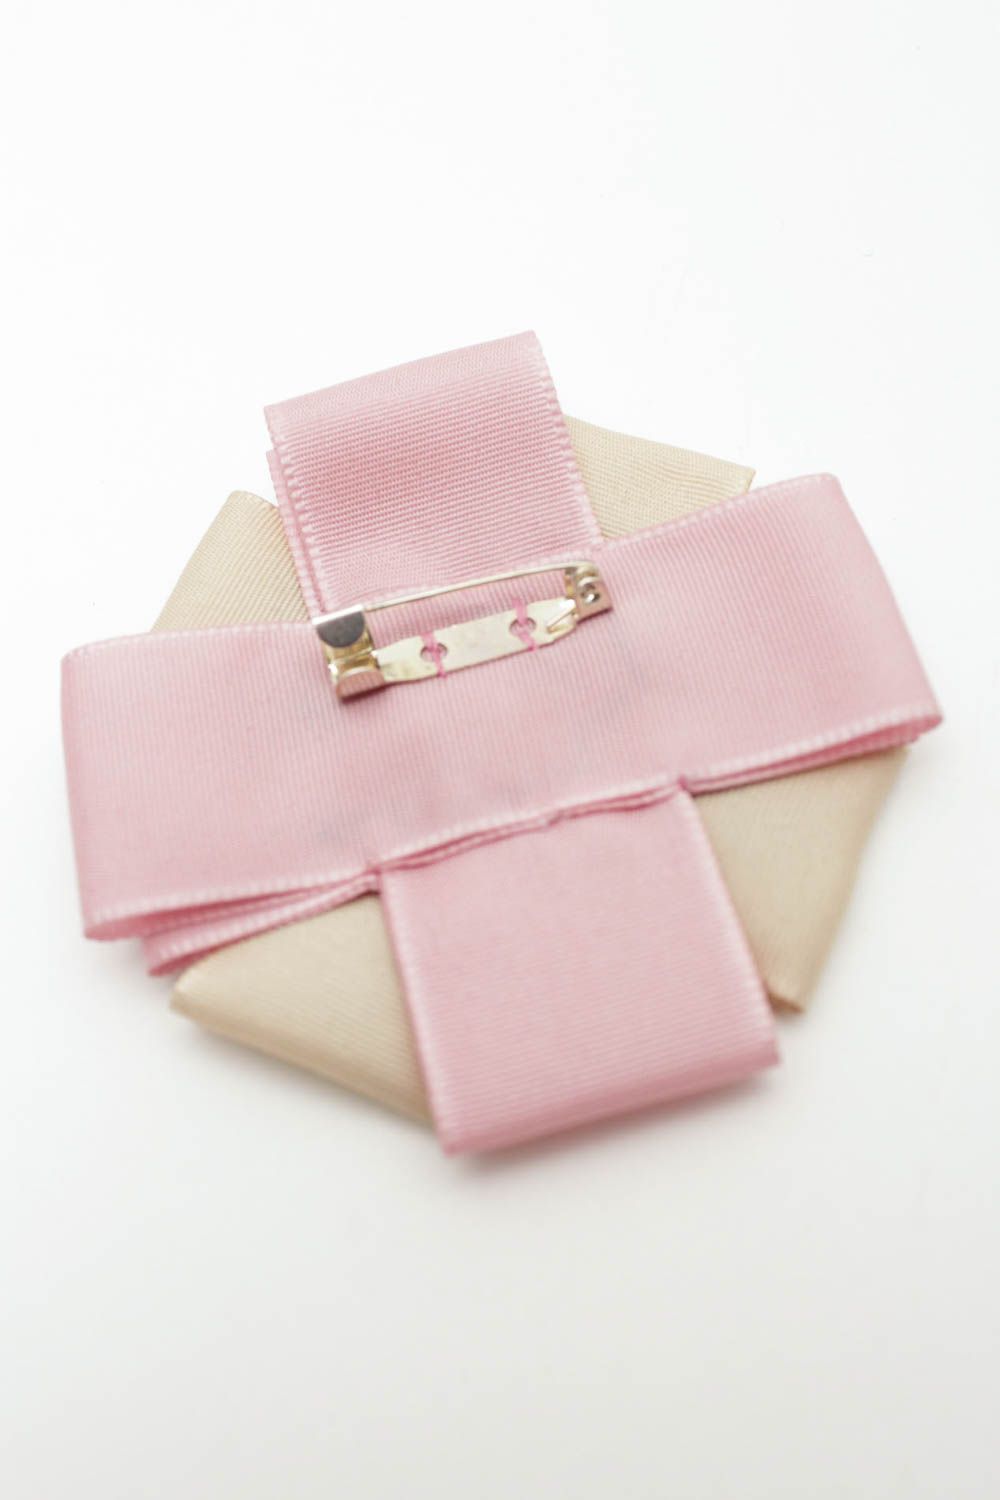 Handmade designer brooch unusual textile brooch stylish cute accessory photo 4